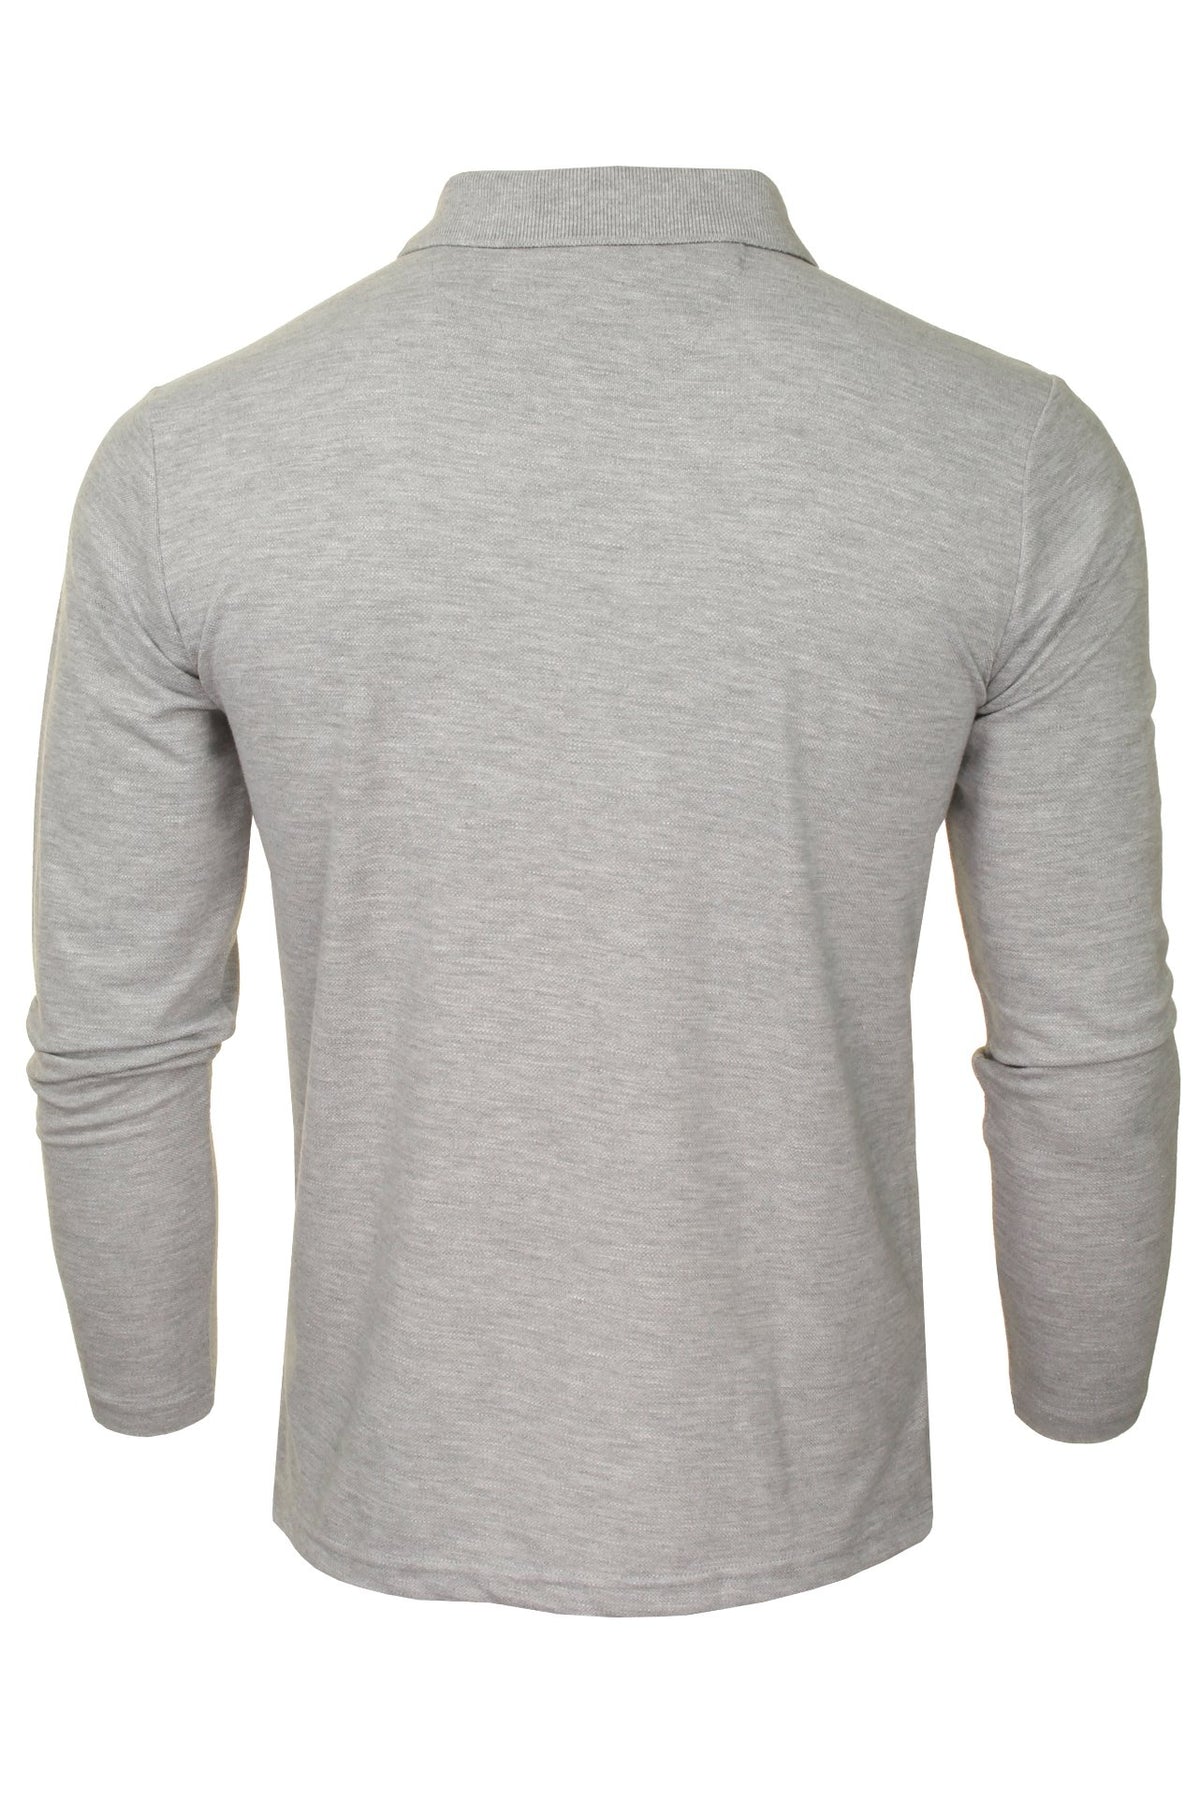 Xact Mens Polo T-Shirt Pique Long Sleeved, 03, XP1003, Grey Marl